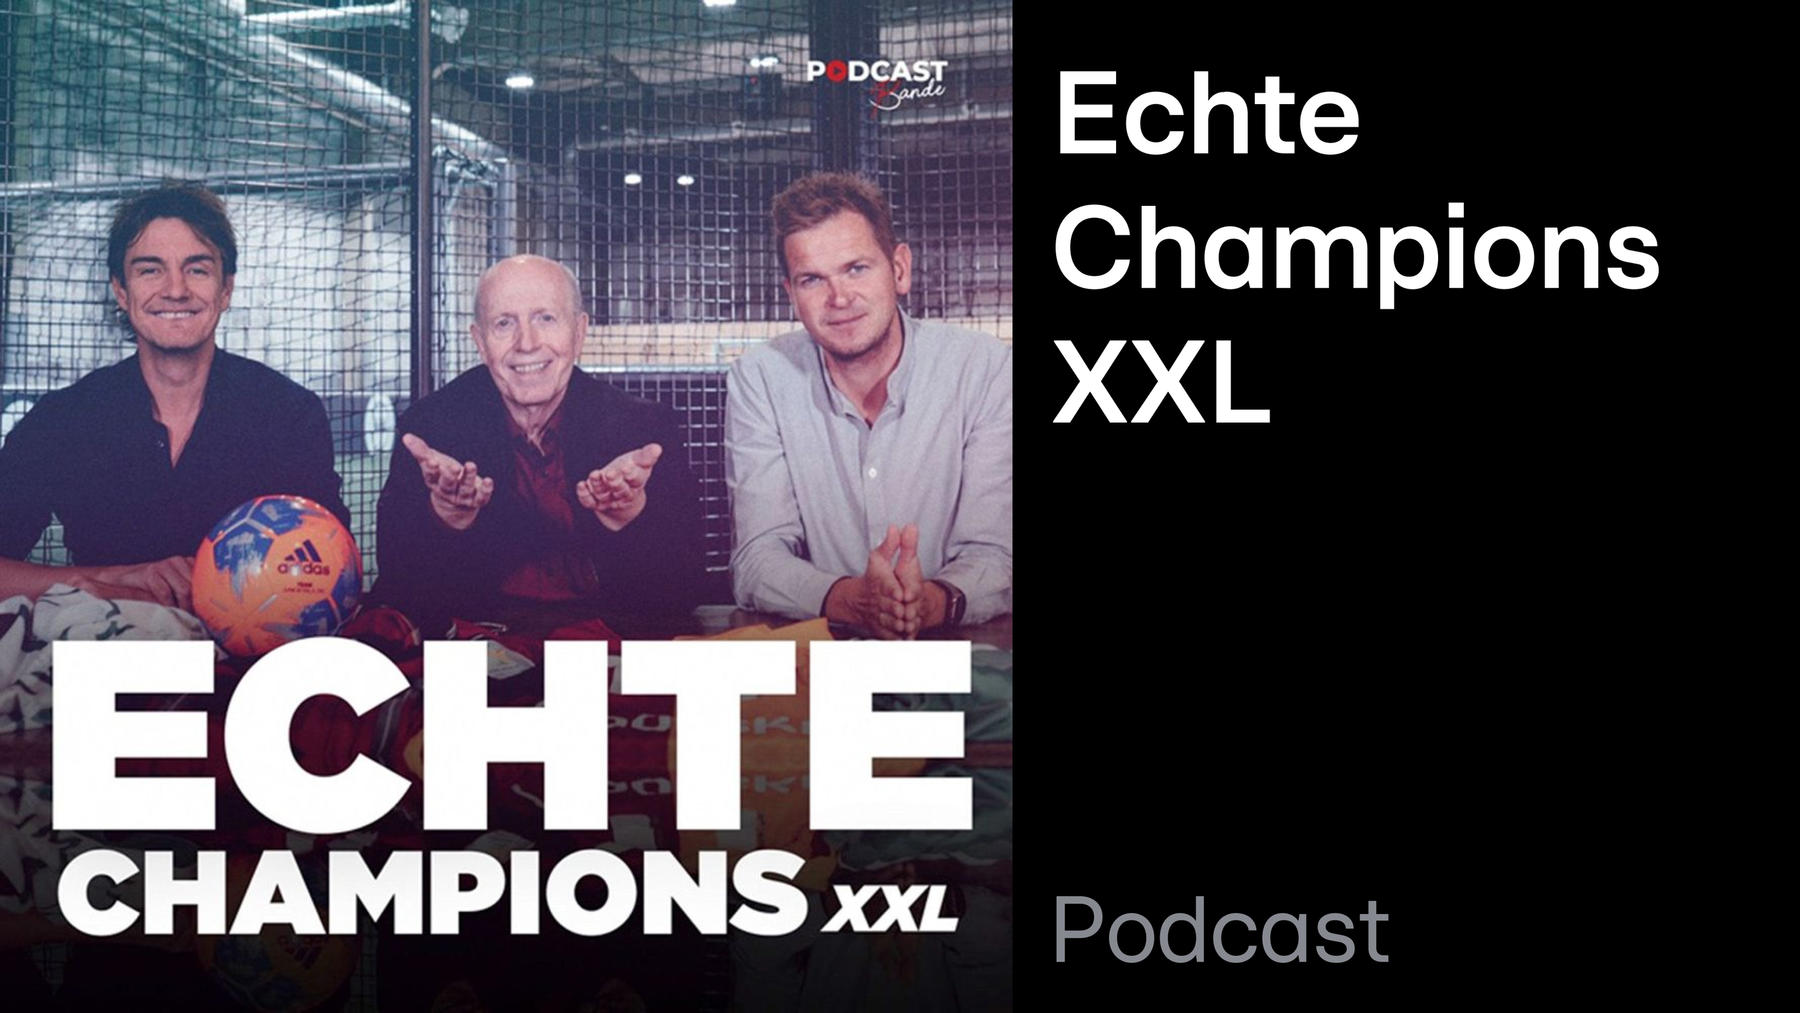 Podcast: Echte Champions XXL